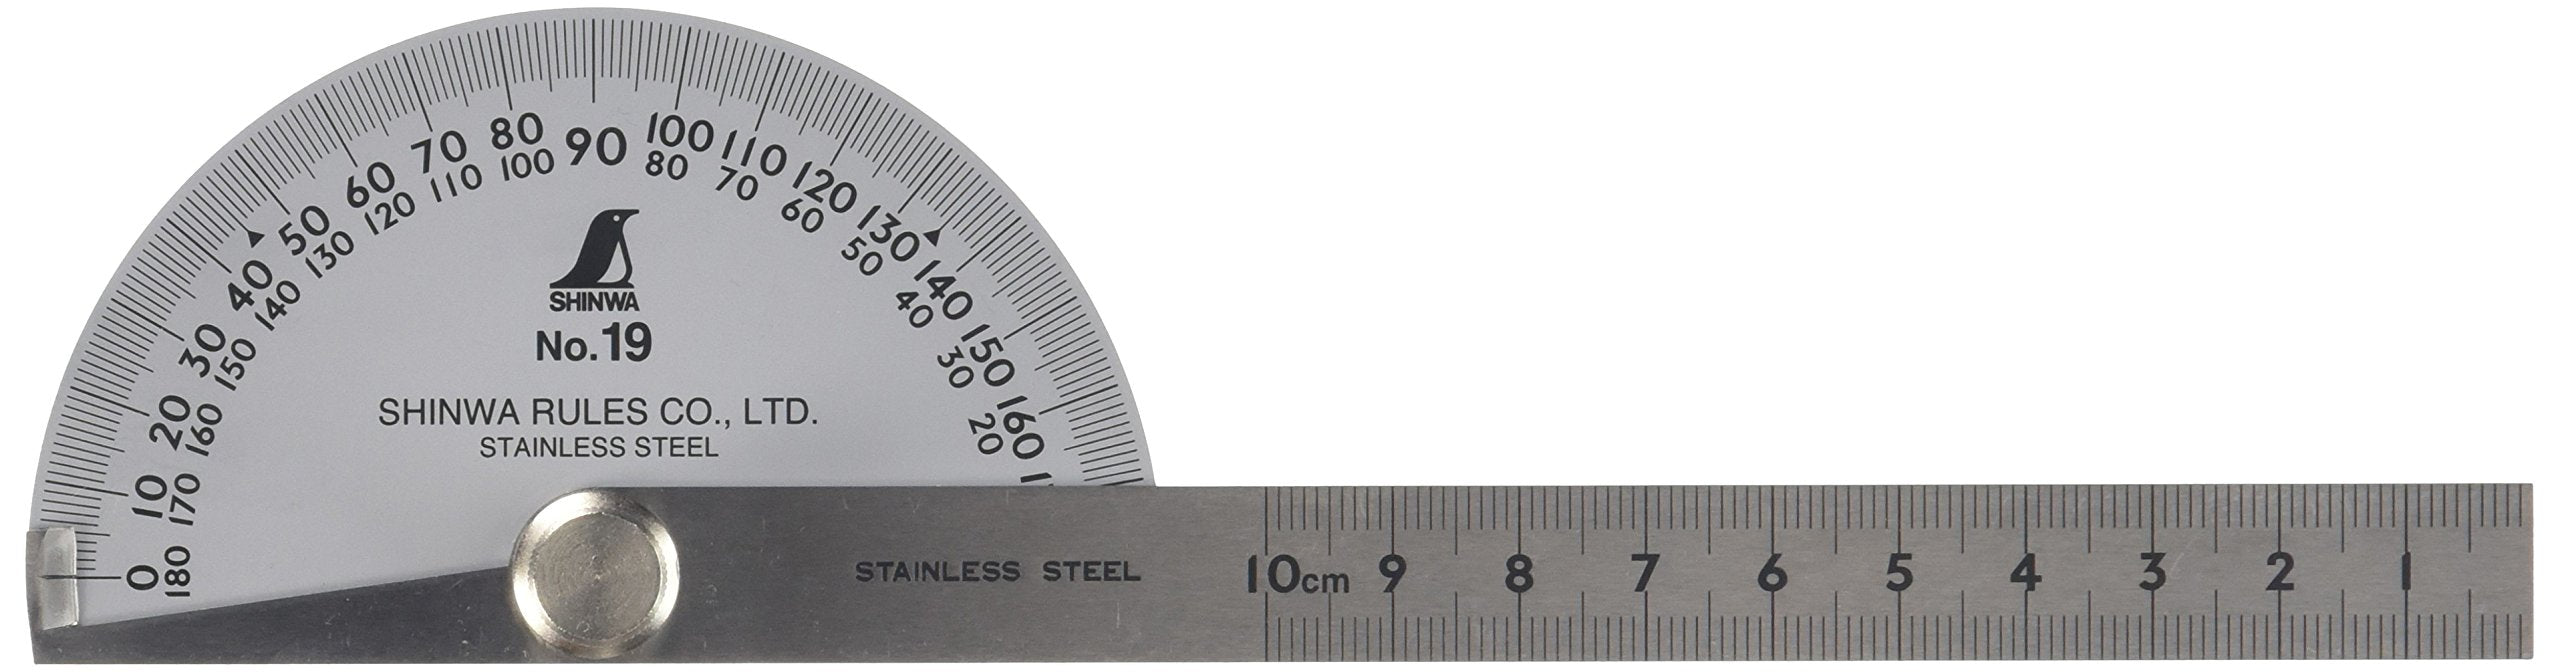 Shinwa Measurement Protractor 2 Rod No.19 Silver - Made In Japan